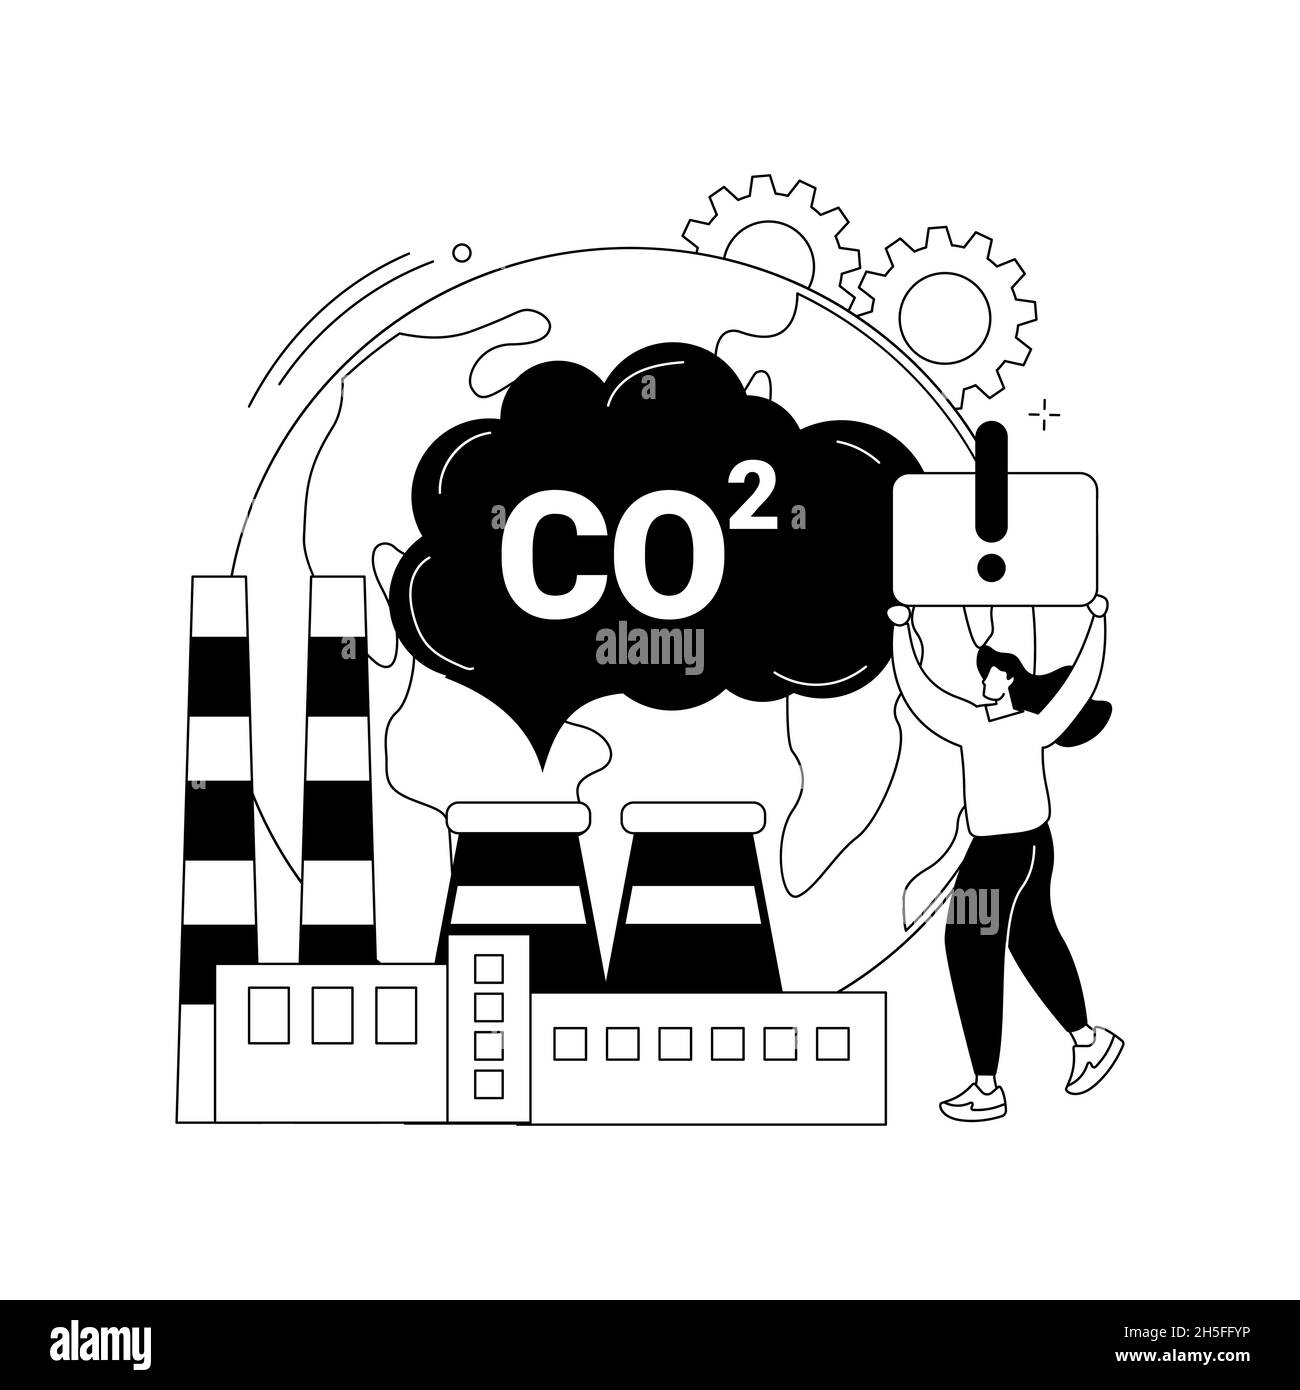 Abstraktes Konzept für globale CO2-Emissionen Vektordarstellung. Stock Vektor